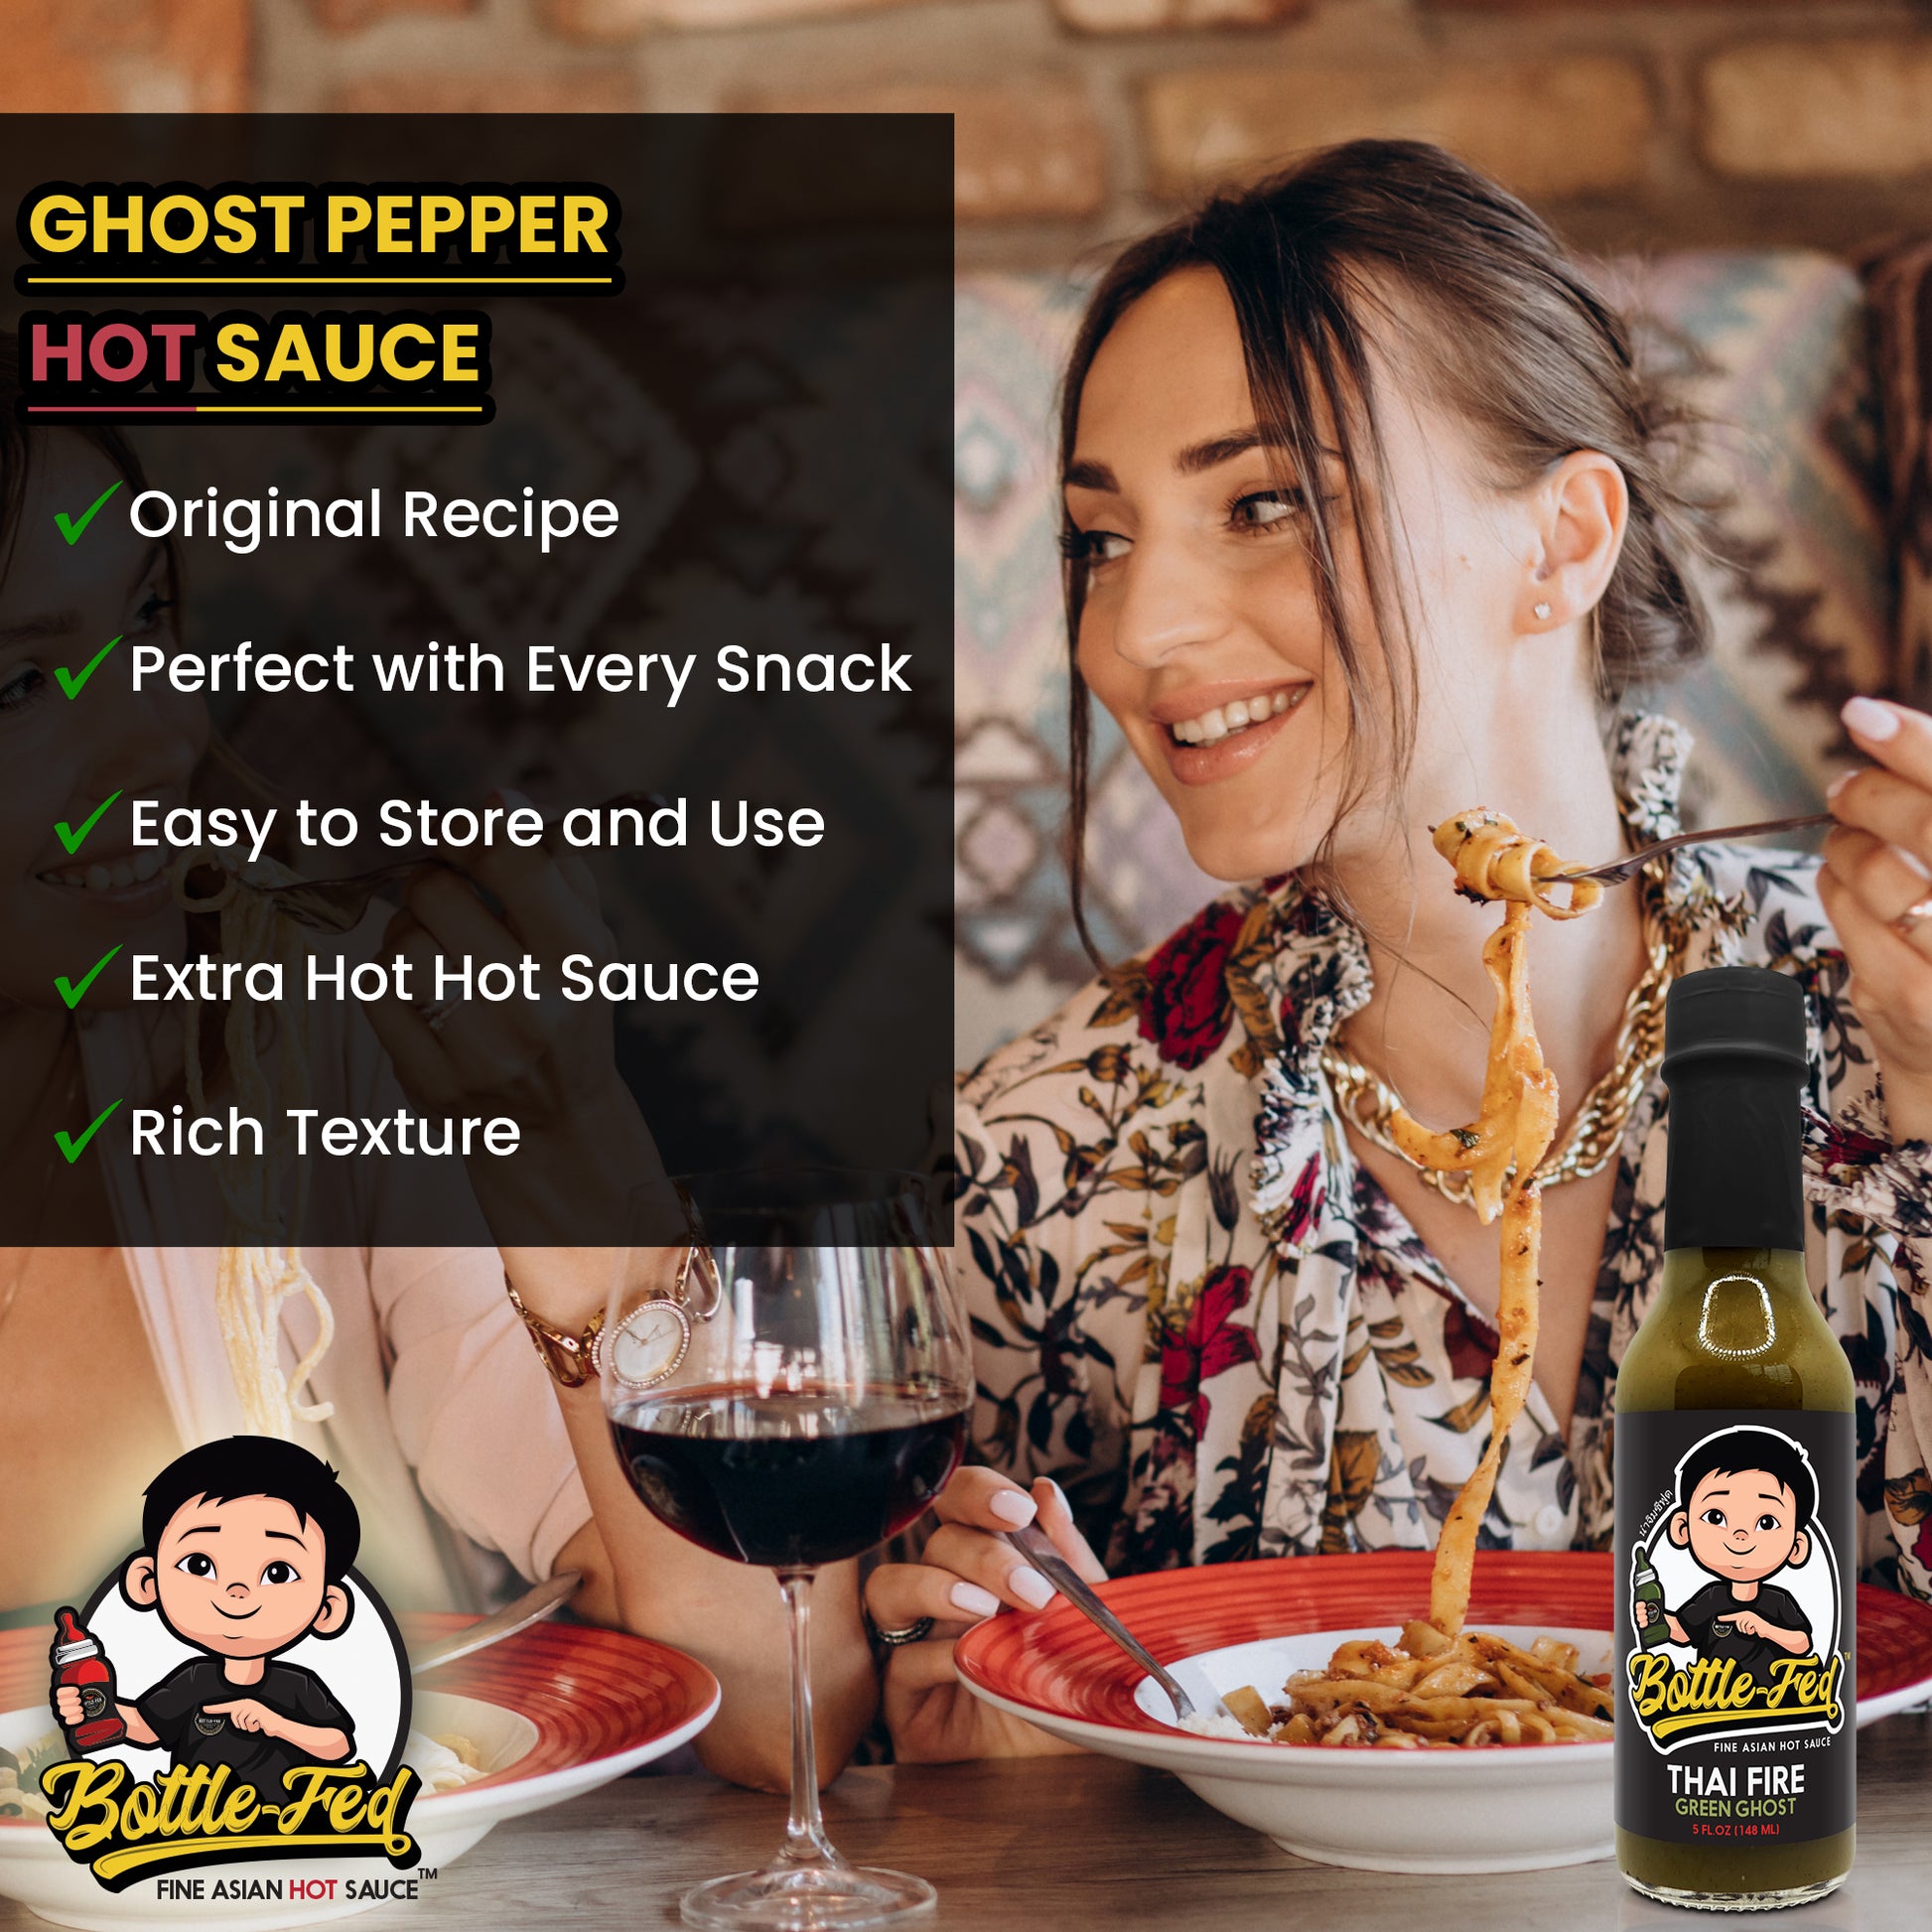 Green Ghost - Bottle-Fed Hot Sauce